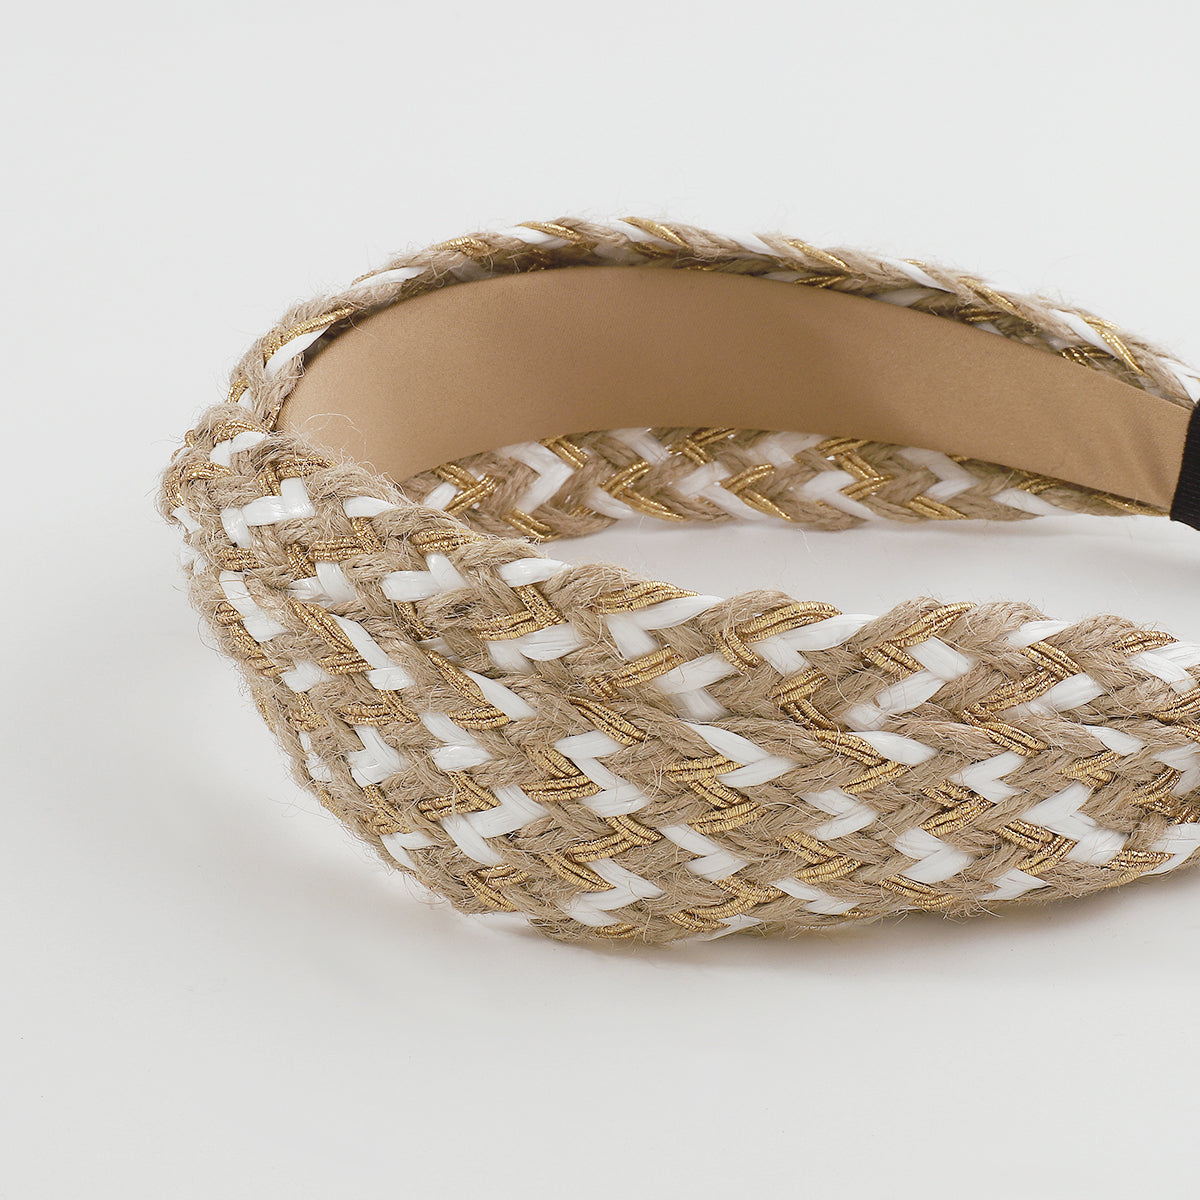 Bohemian Straw Weaving Braided Cross Headband medyjewelry